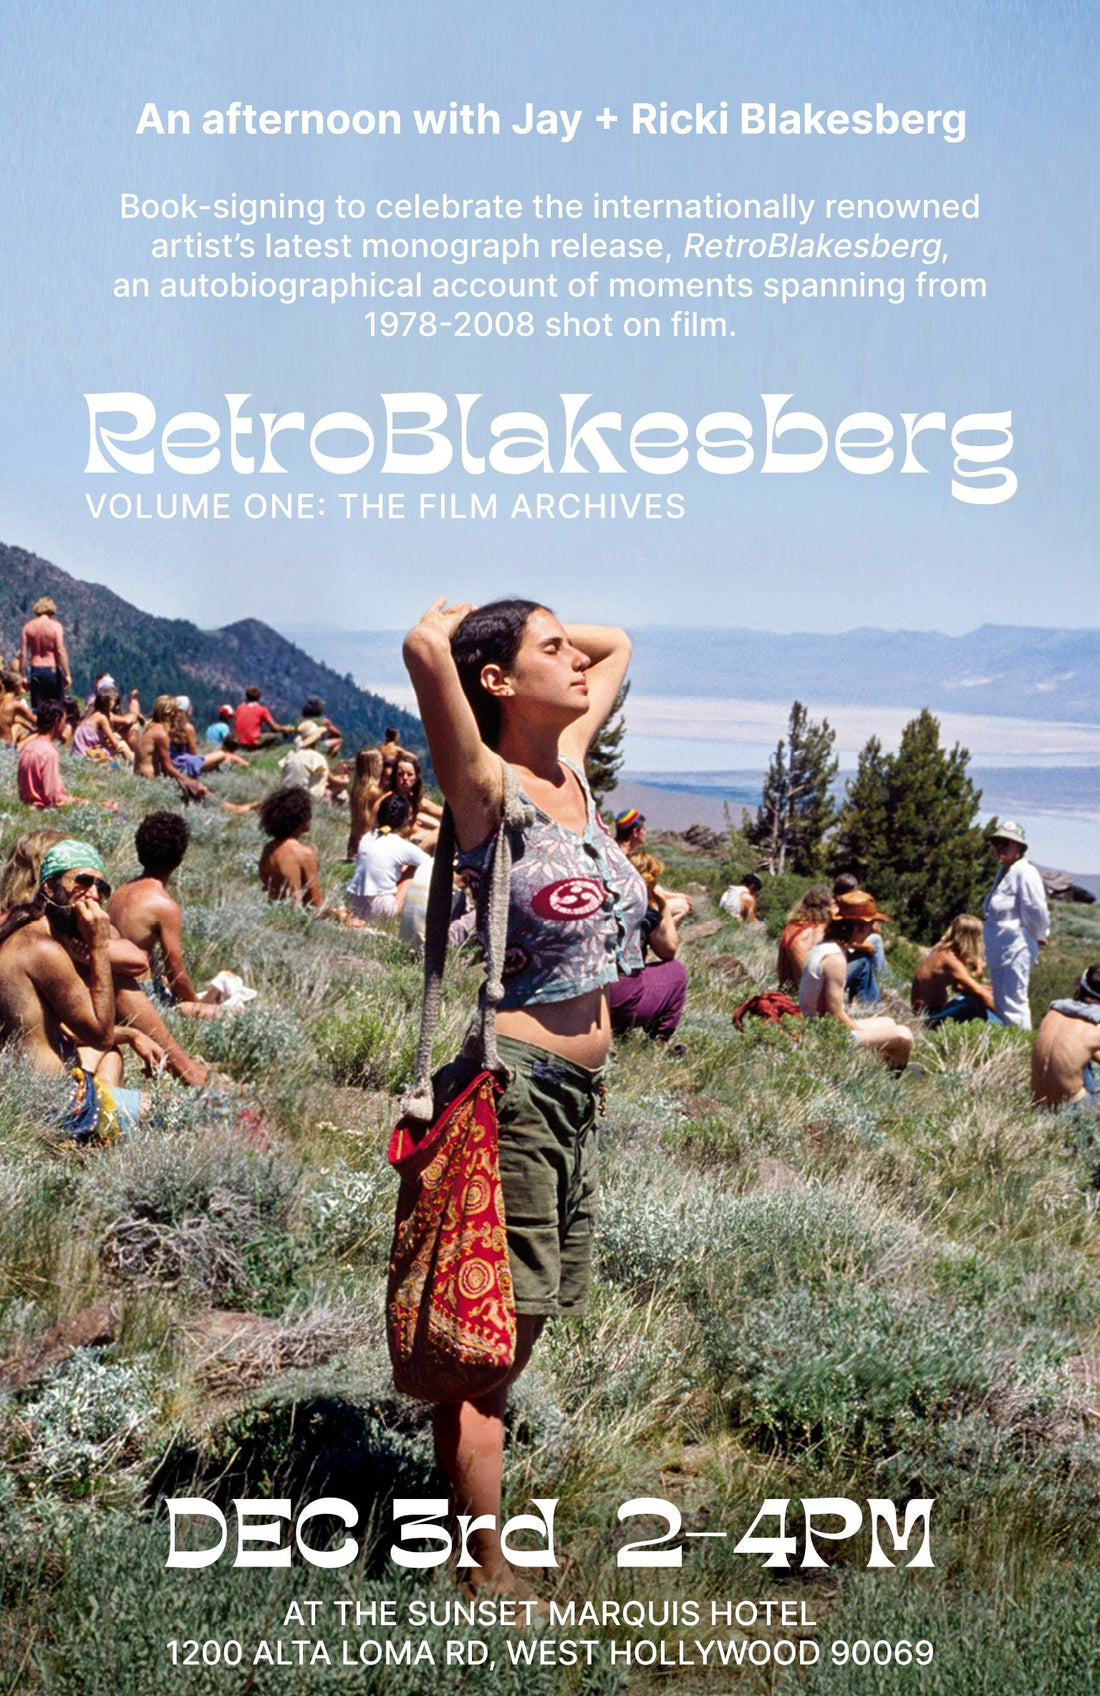 RetroBlakesberg: Volume One | Book Signing with Jay + Ricki Blakesberg - Morrison Hotel Gallery